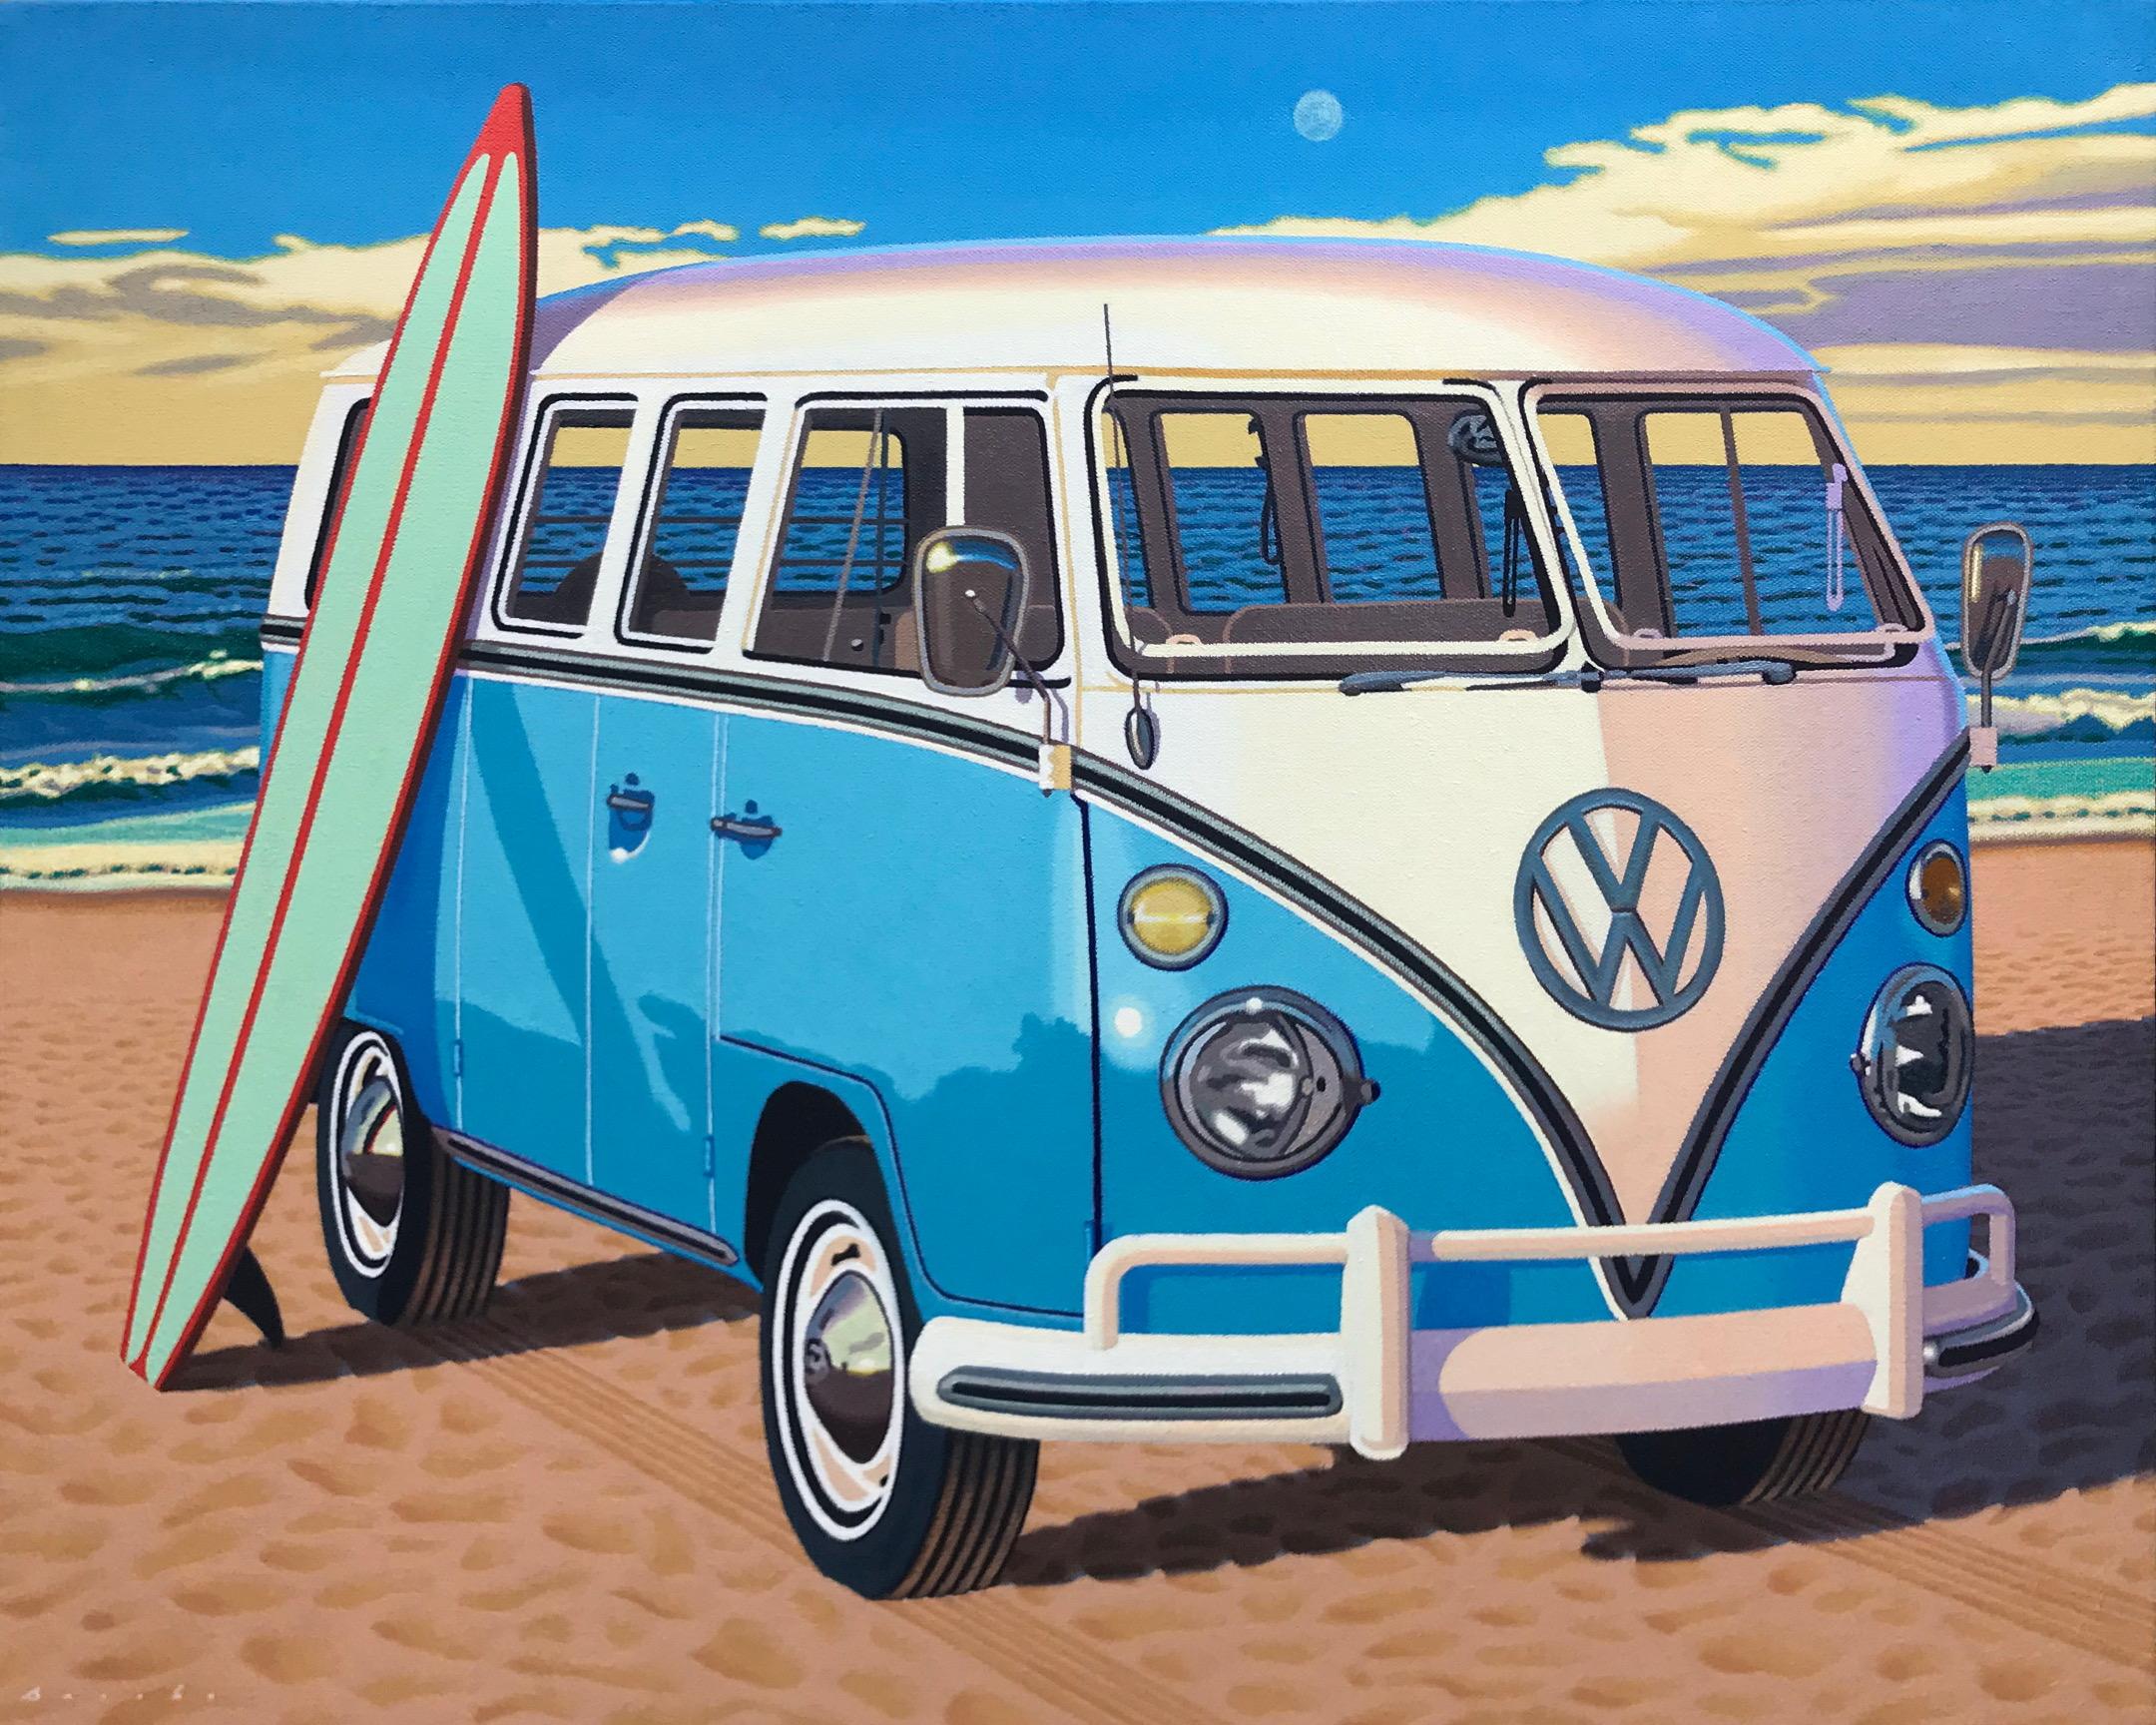 Rob Brooks Still-Life Painting - "Surfboard Samba" photorealistic oil painting of vintage blue Volkswagen bus